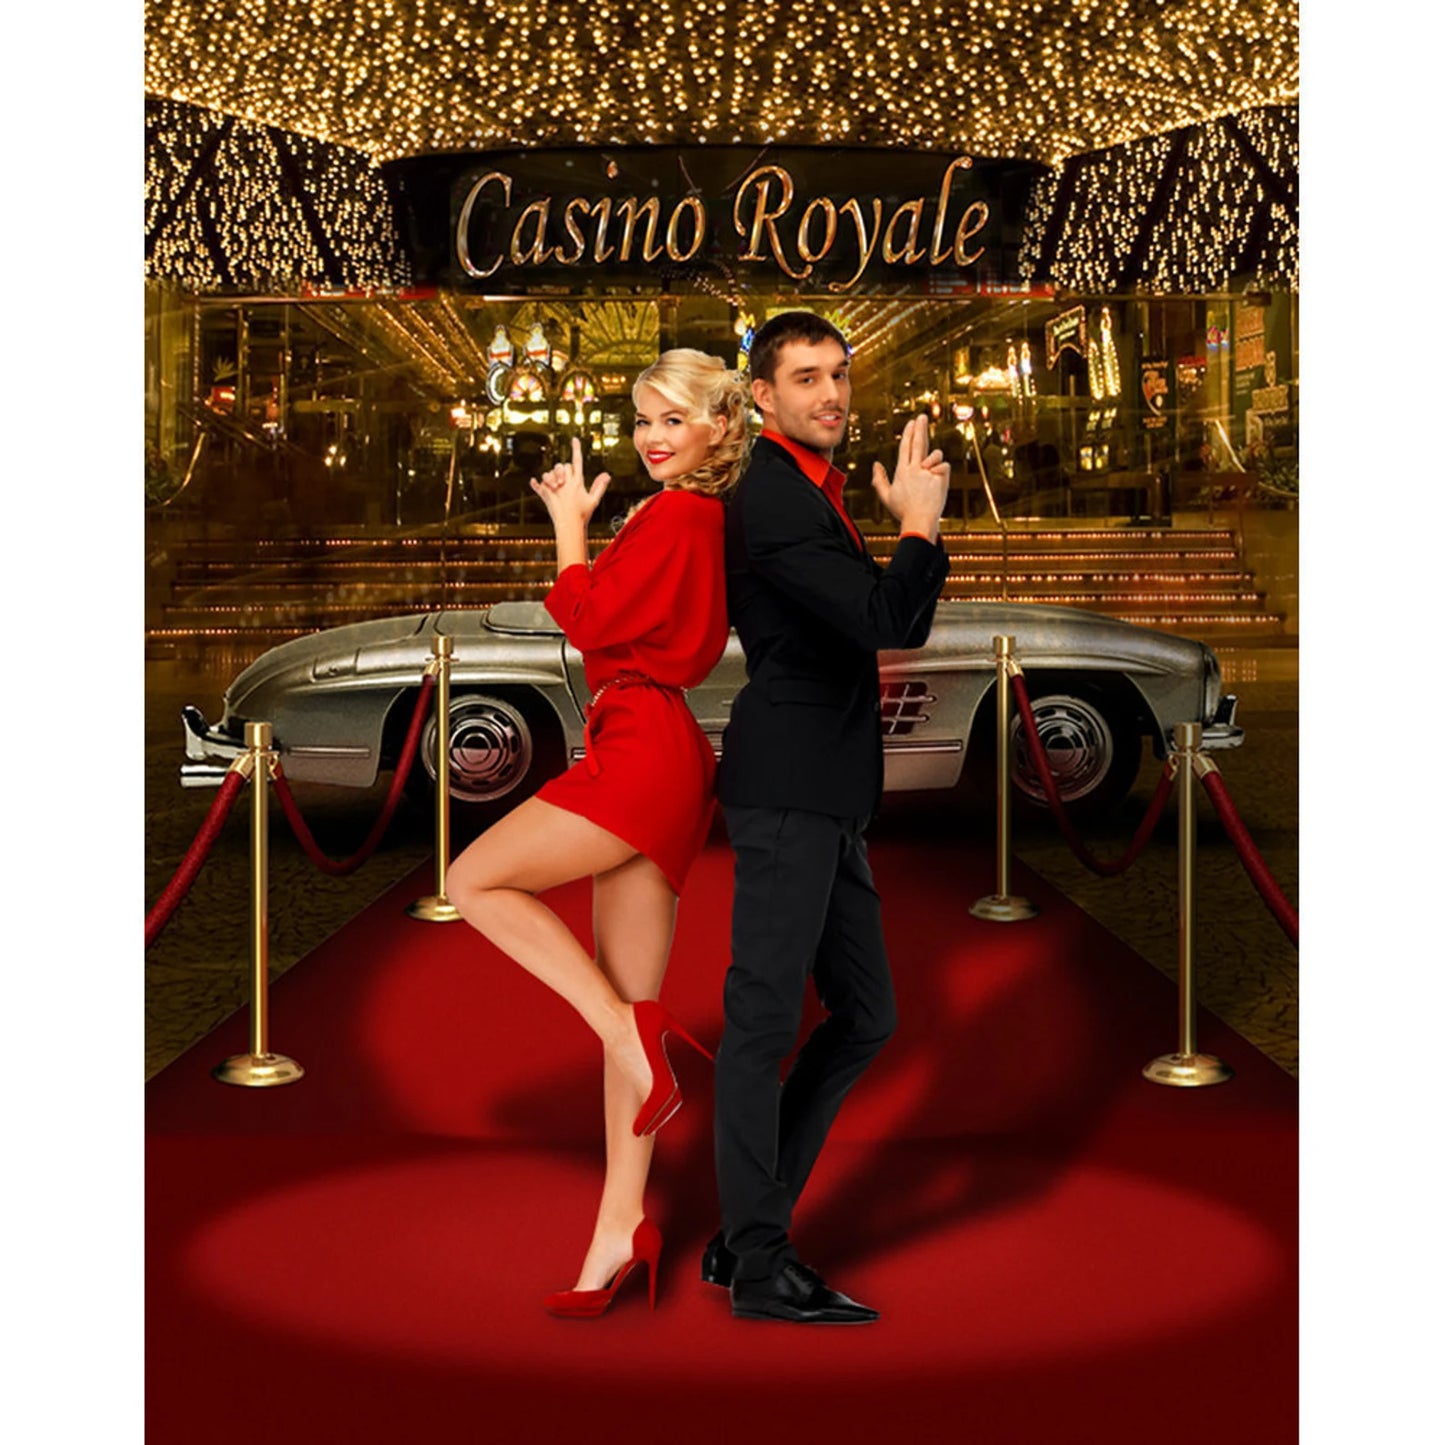 Casino Royale 007, James Bond Photo Backdrop